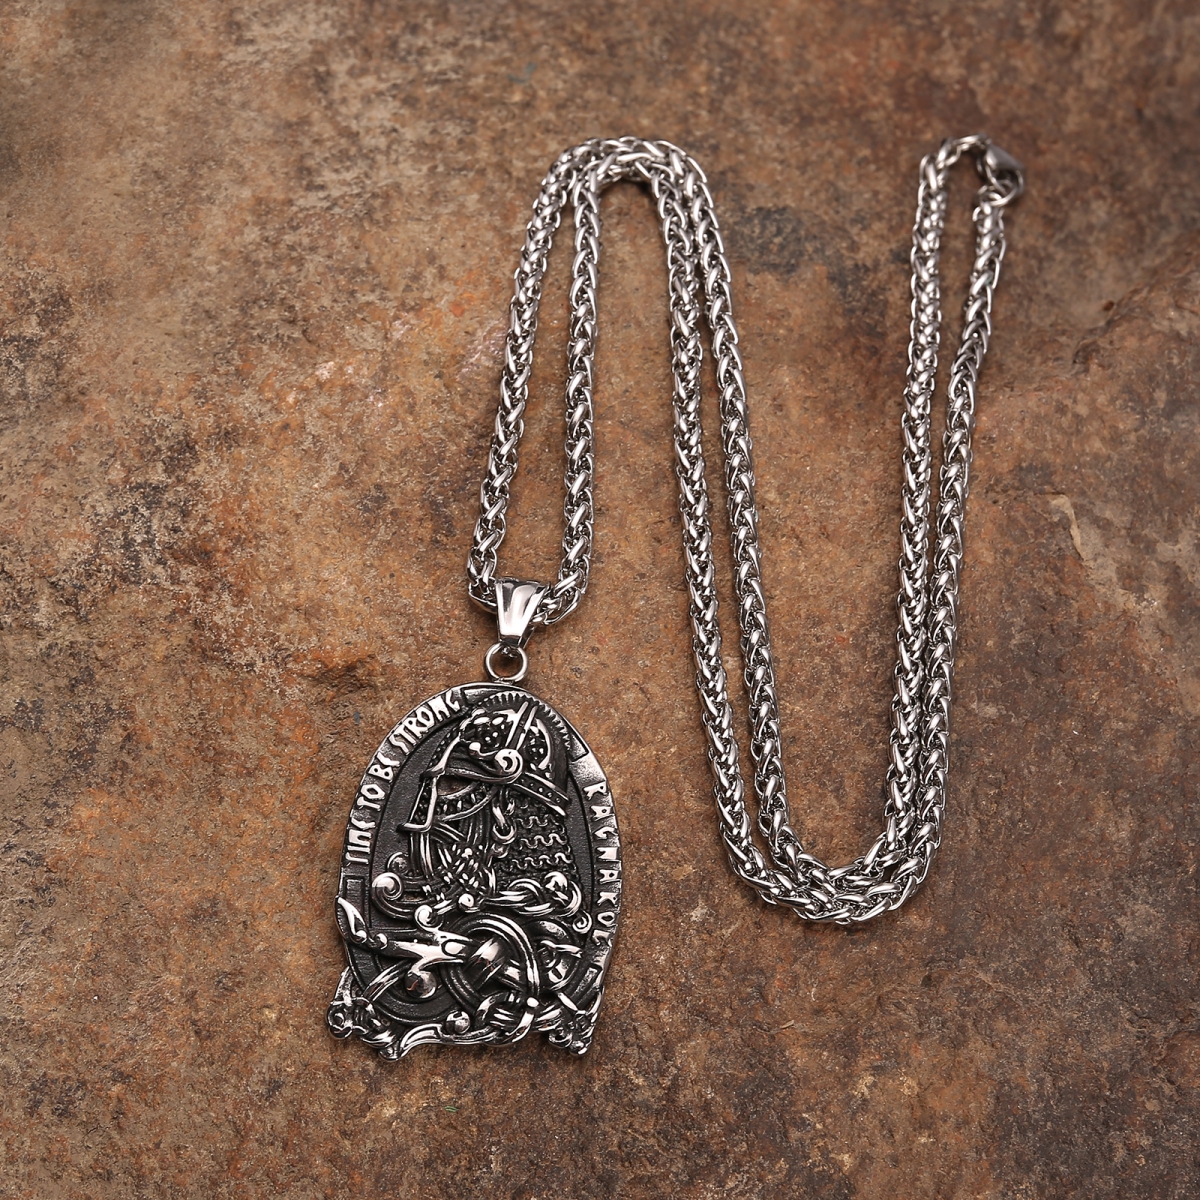 Ragnarok US$2.9/PC-NORSECOLLECTION- Viking Jewelry,Viking Necklace,Viking Bracelet,Viking Rings,Viking Mugs,Viking Accessories,Viking Crafts